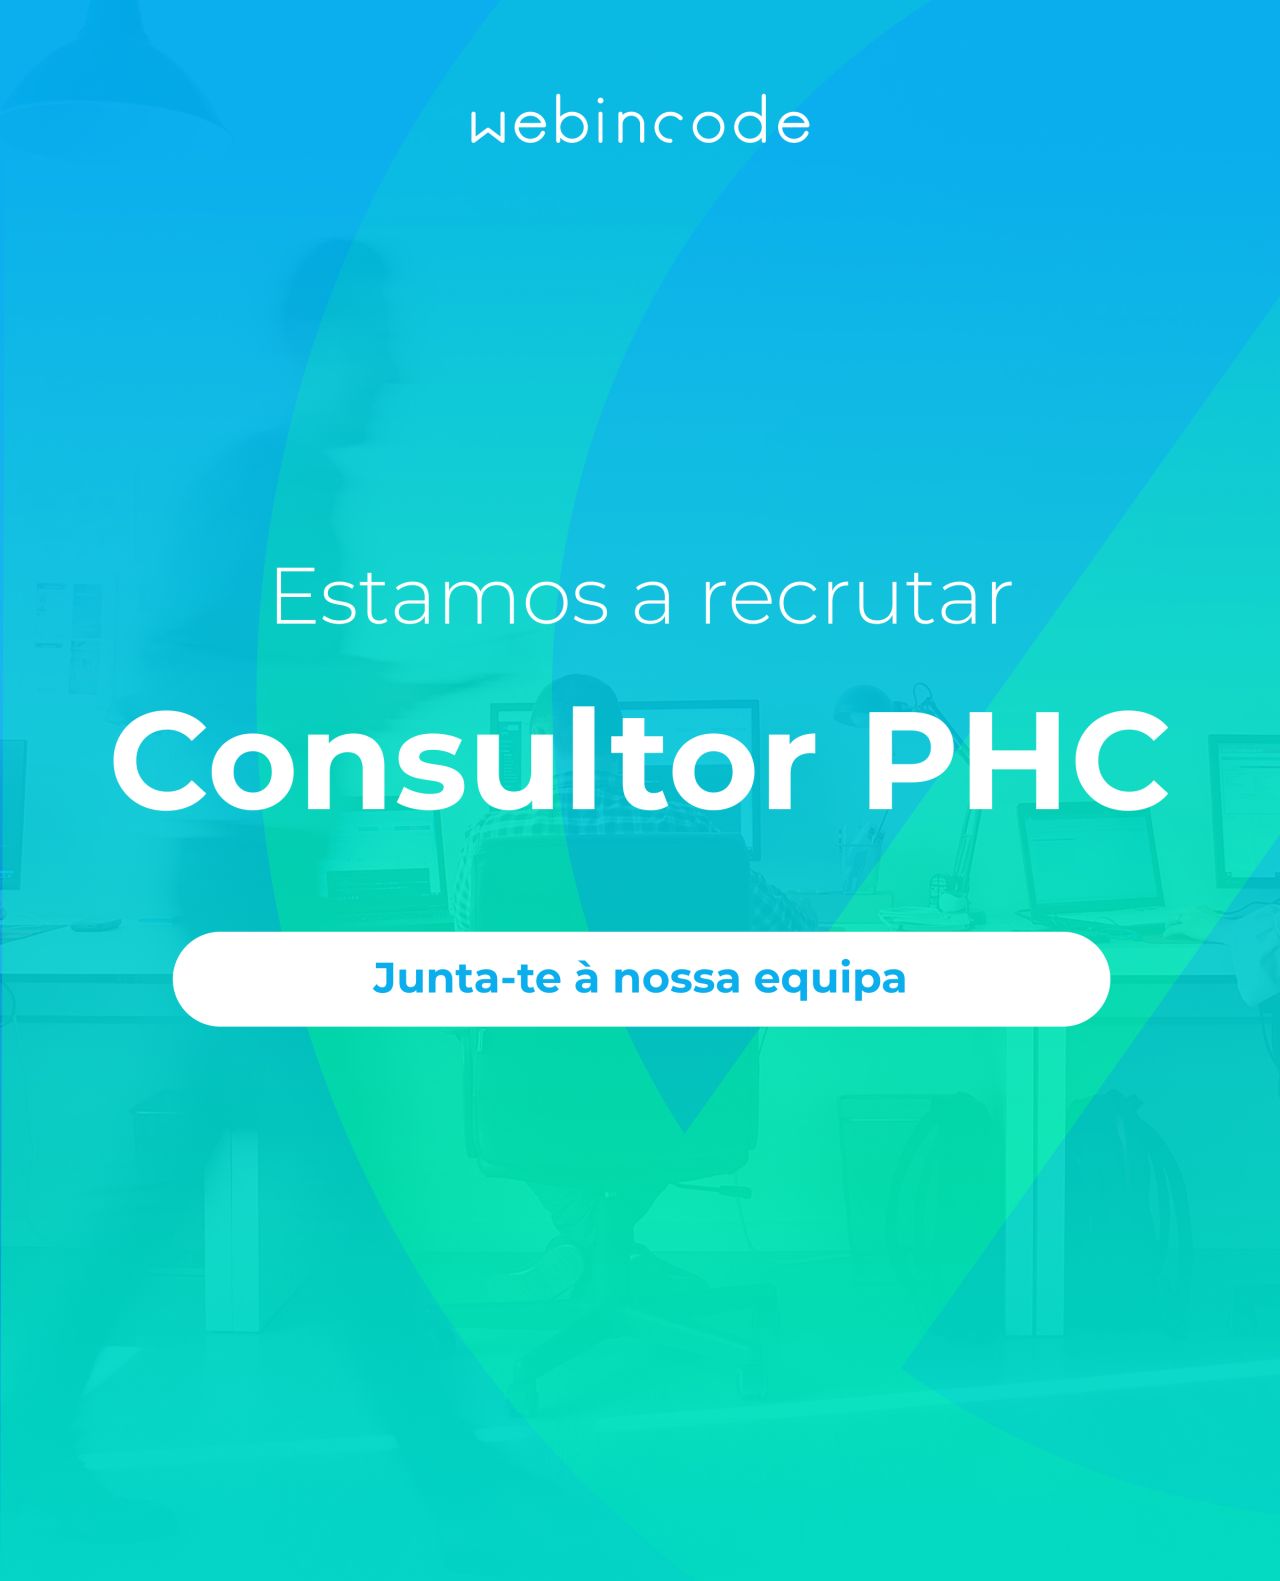 Consultor PHC